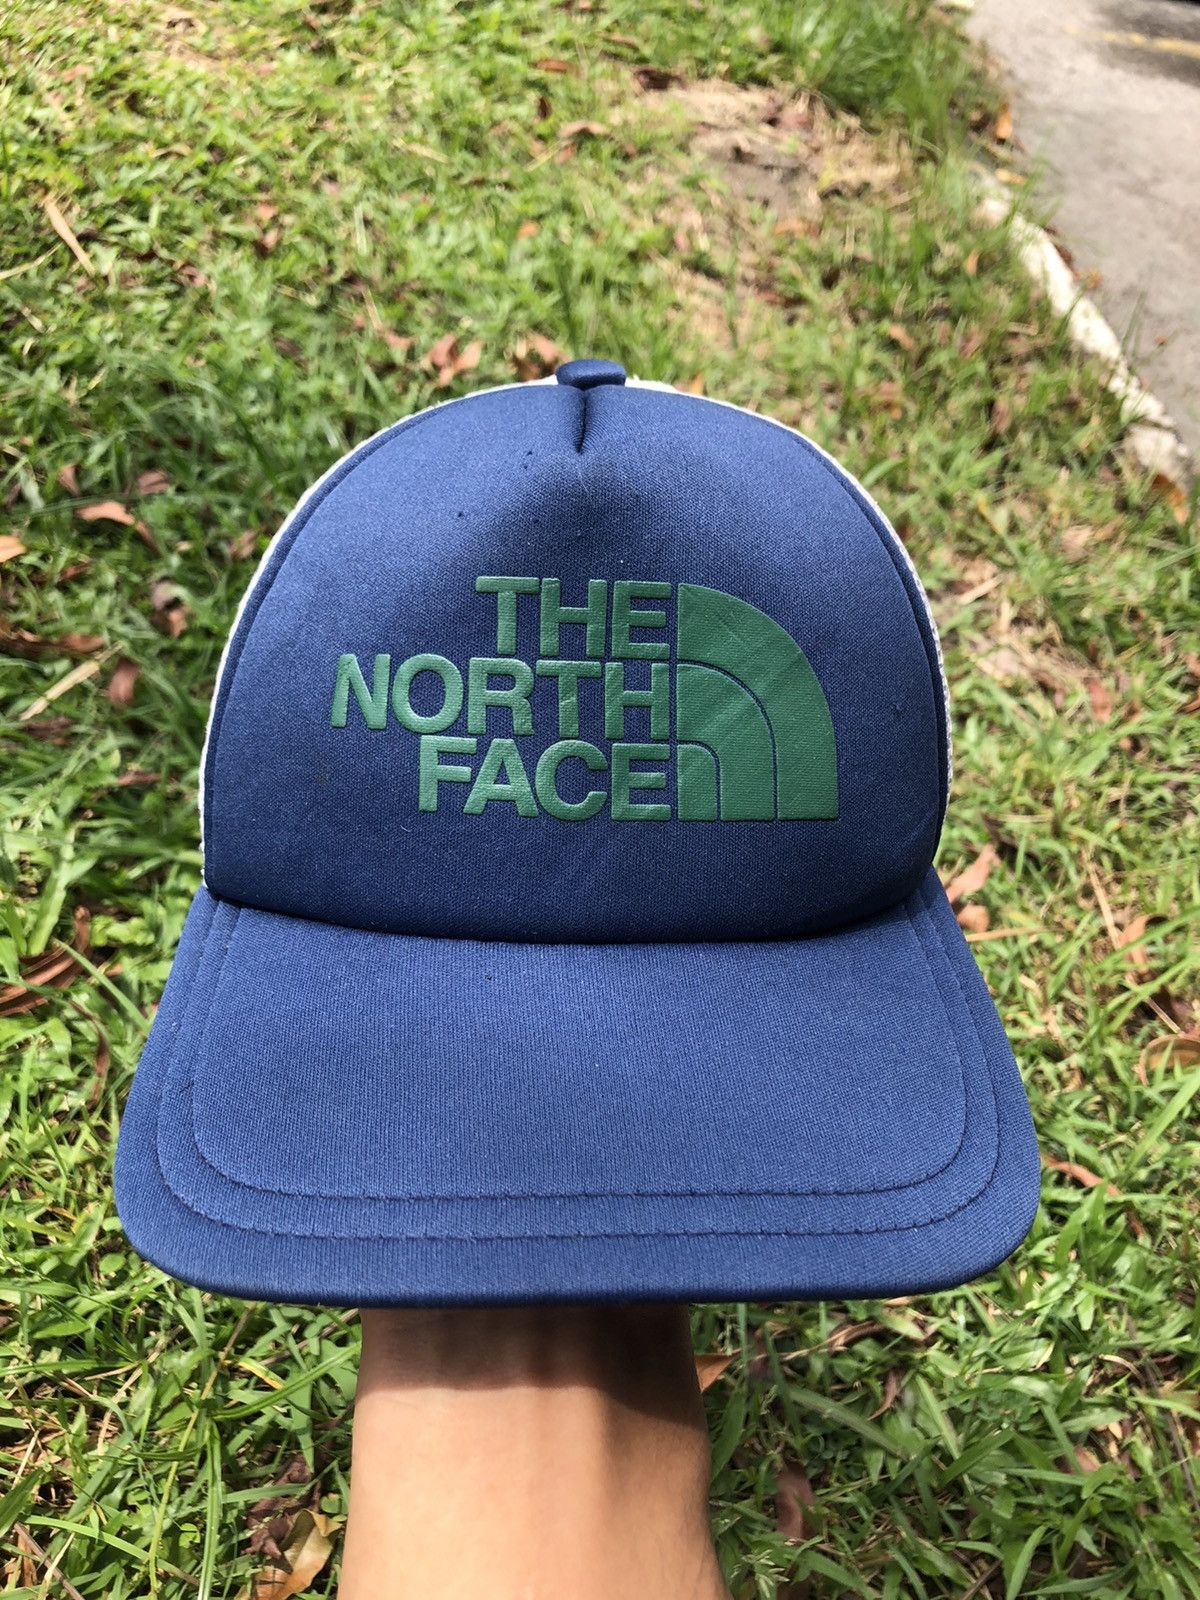 The North Face Trucker Snapback Hat Nice Design - 4